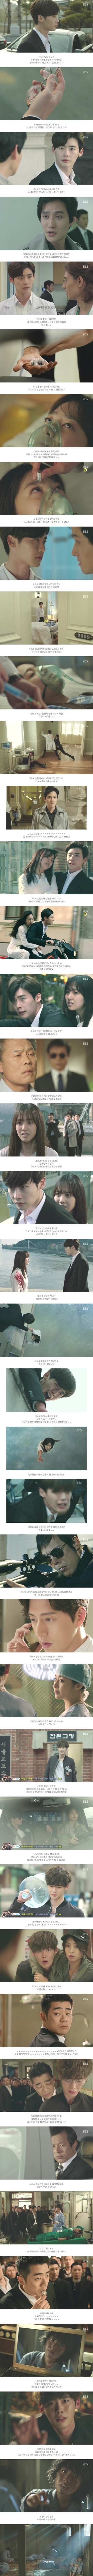 episode 2 captures for the Korean drama 'Doctor Stranger'